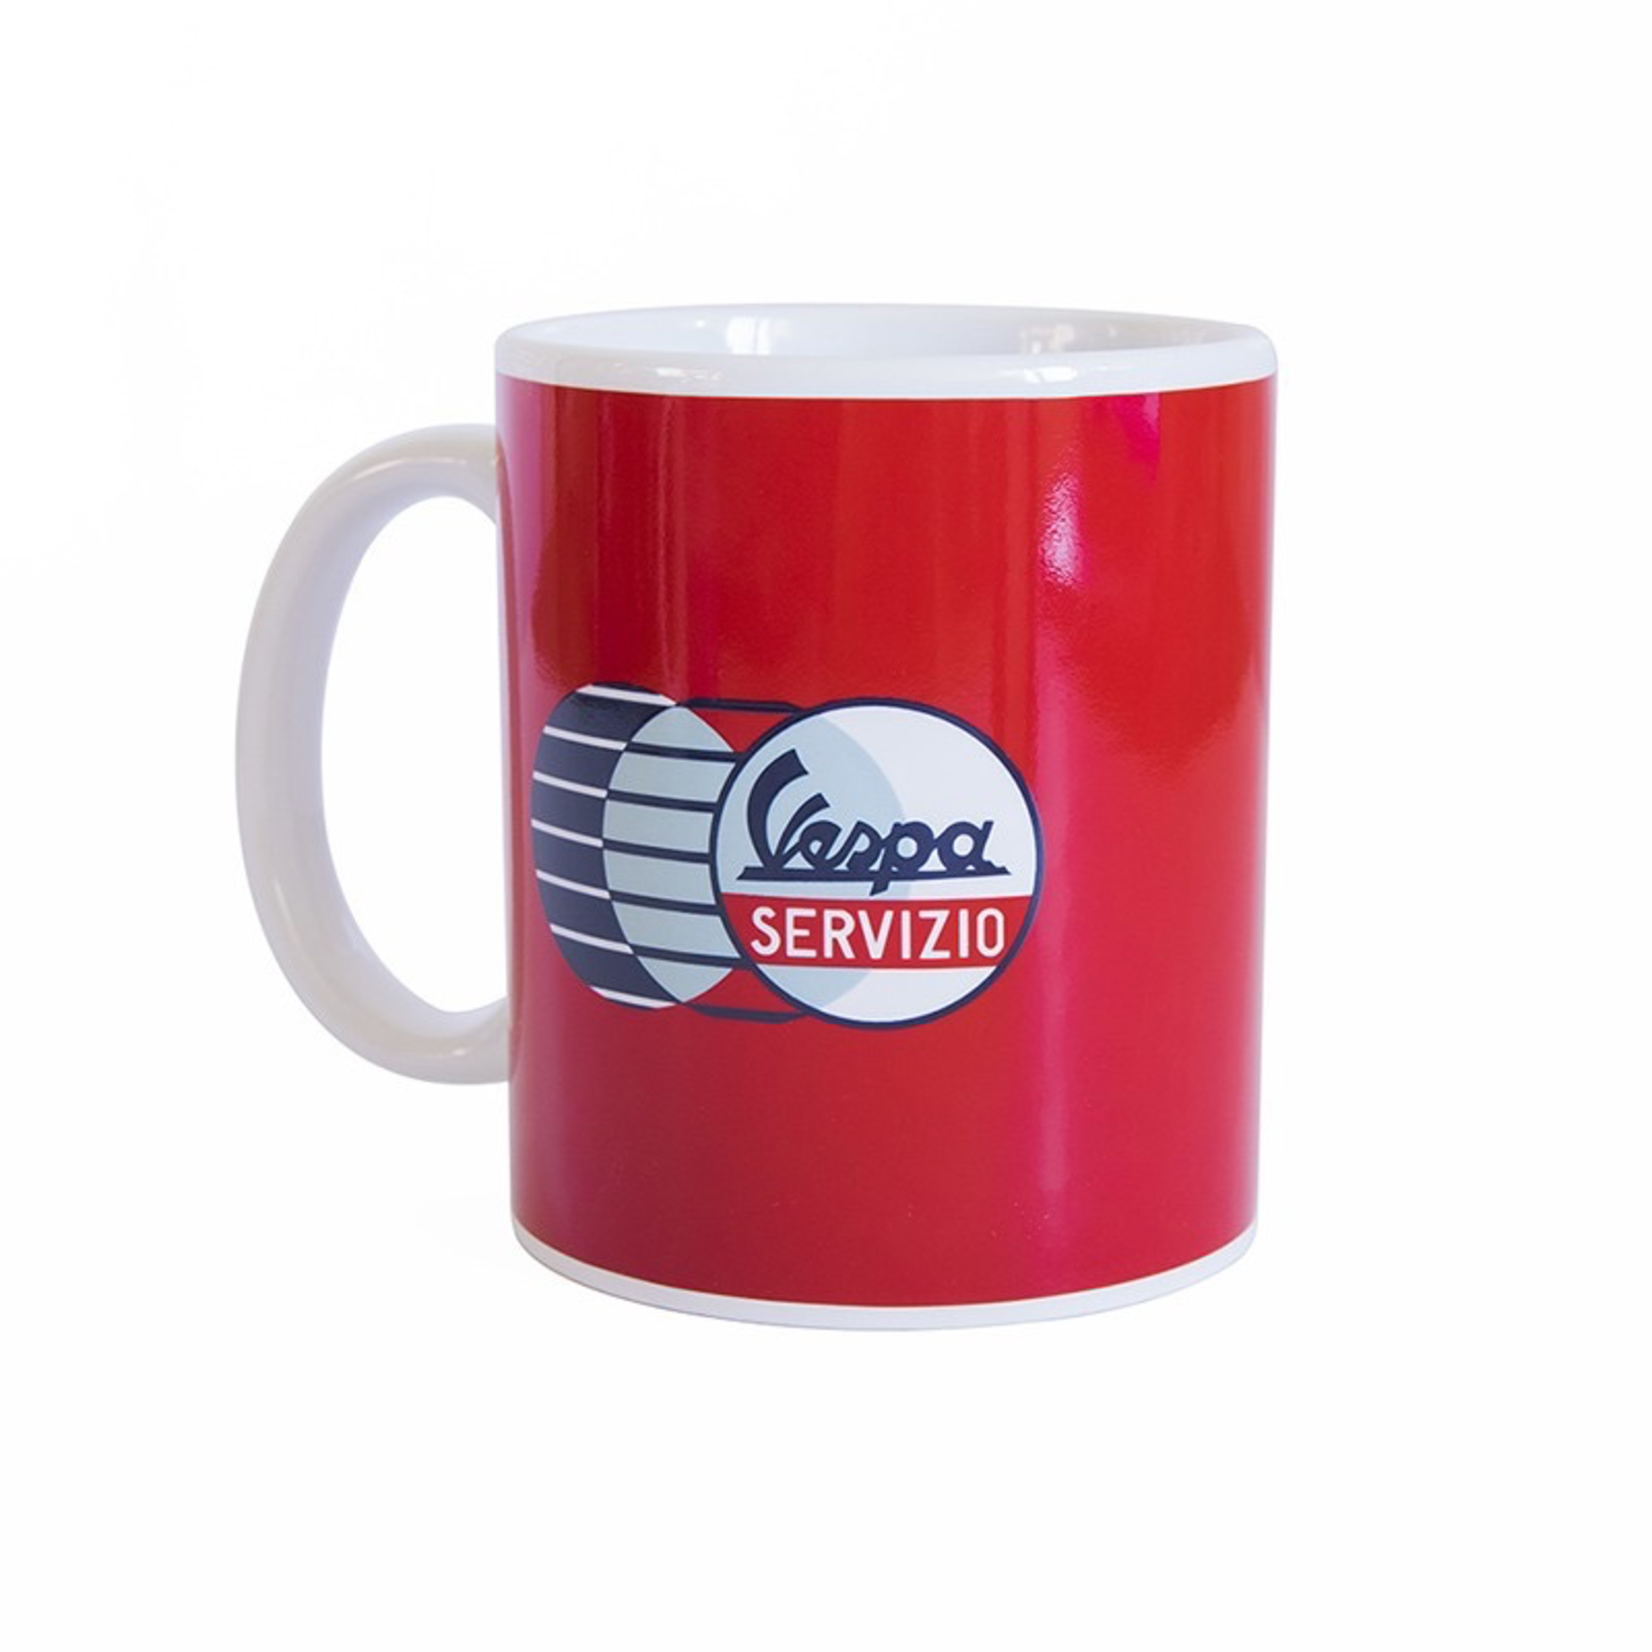 Lifestyle Mug, “Vespa Servizio” Red Ceramic